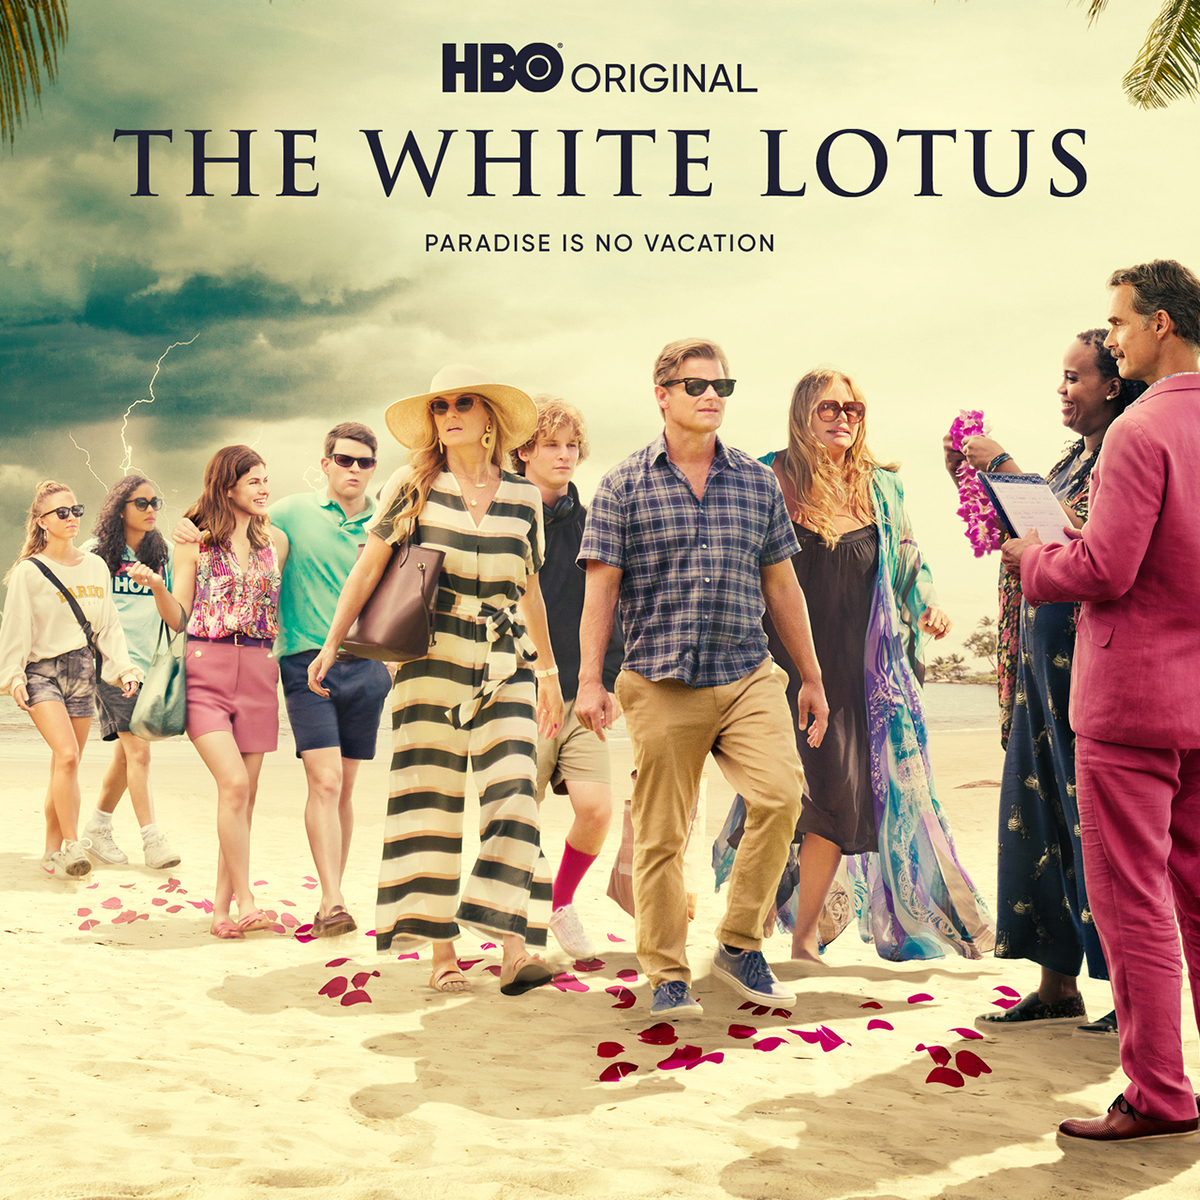 The White Lotus' Belinda Is Back For Season Three